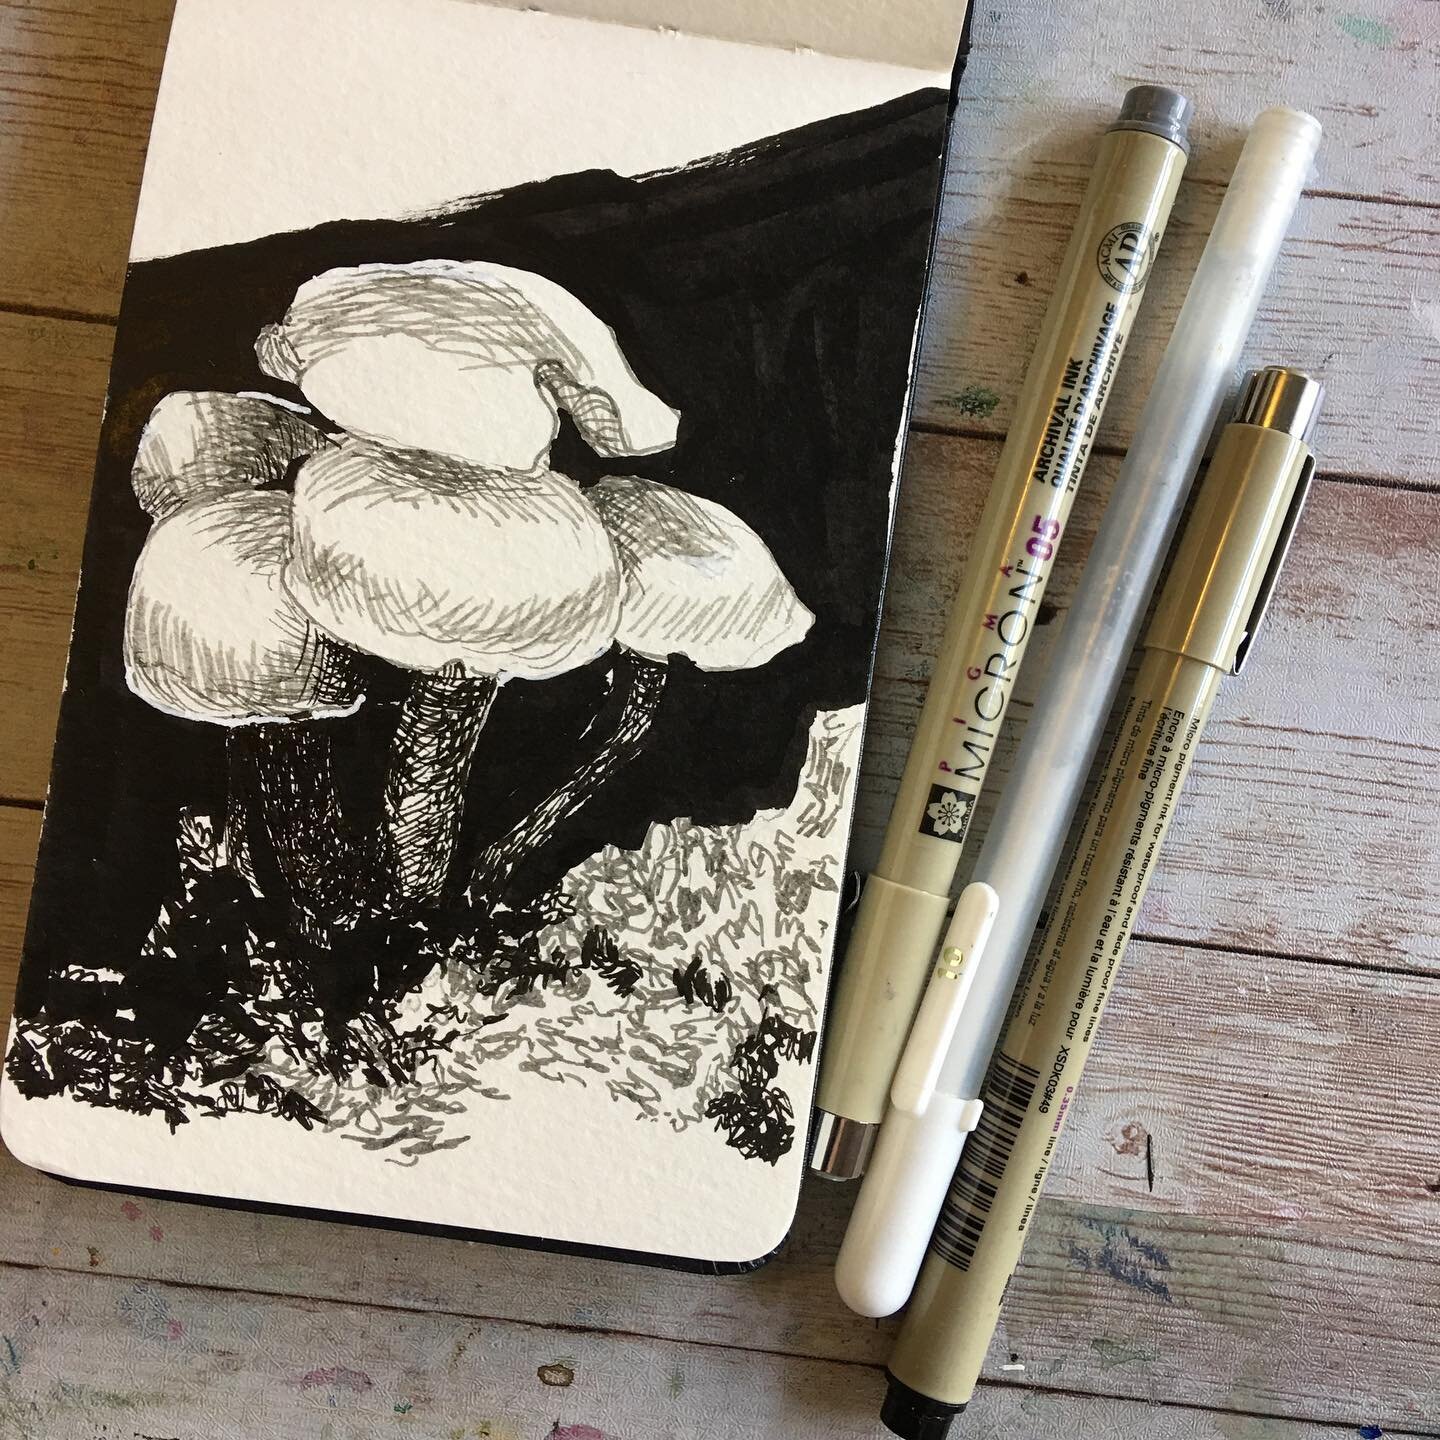 #inktober #botanical #fungi #mushroom #penandink #micronpen #moleskine #drawing #sketchbook #quicksketch 
A month of fungi continues